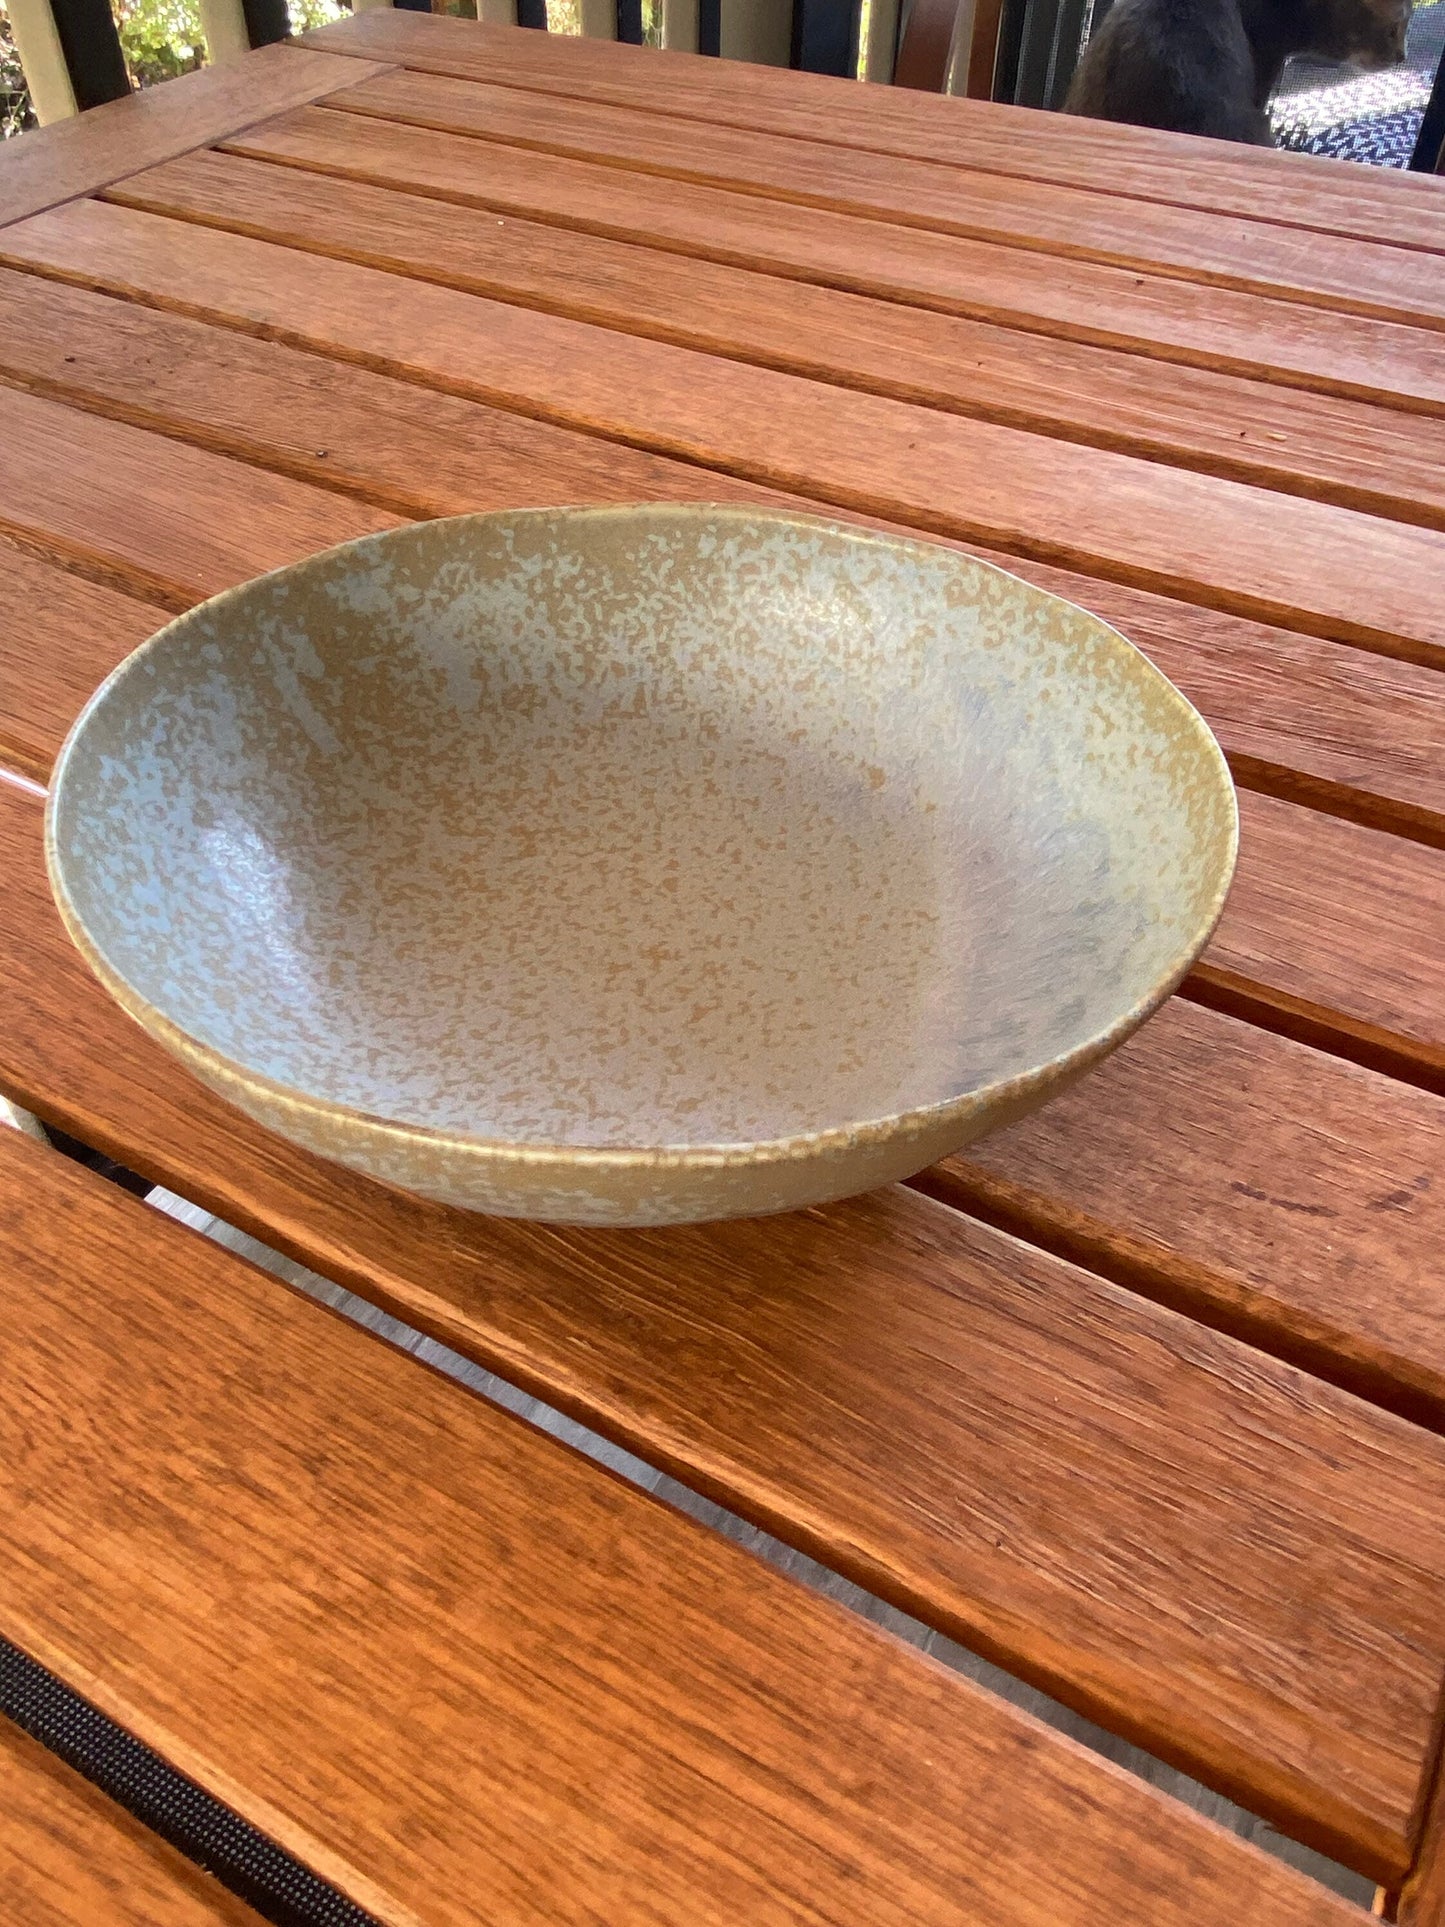 Oval ceramic wafu-Japanese style medium saucer, 8" x 7” x 2" deep